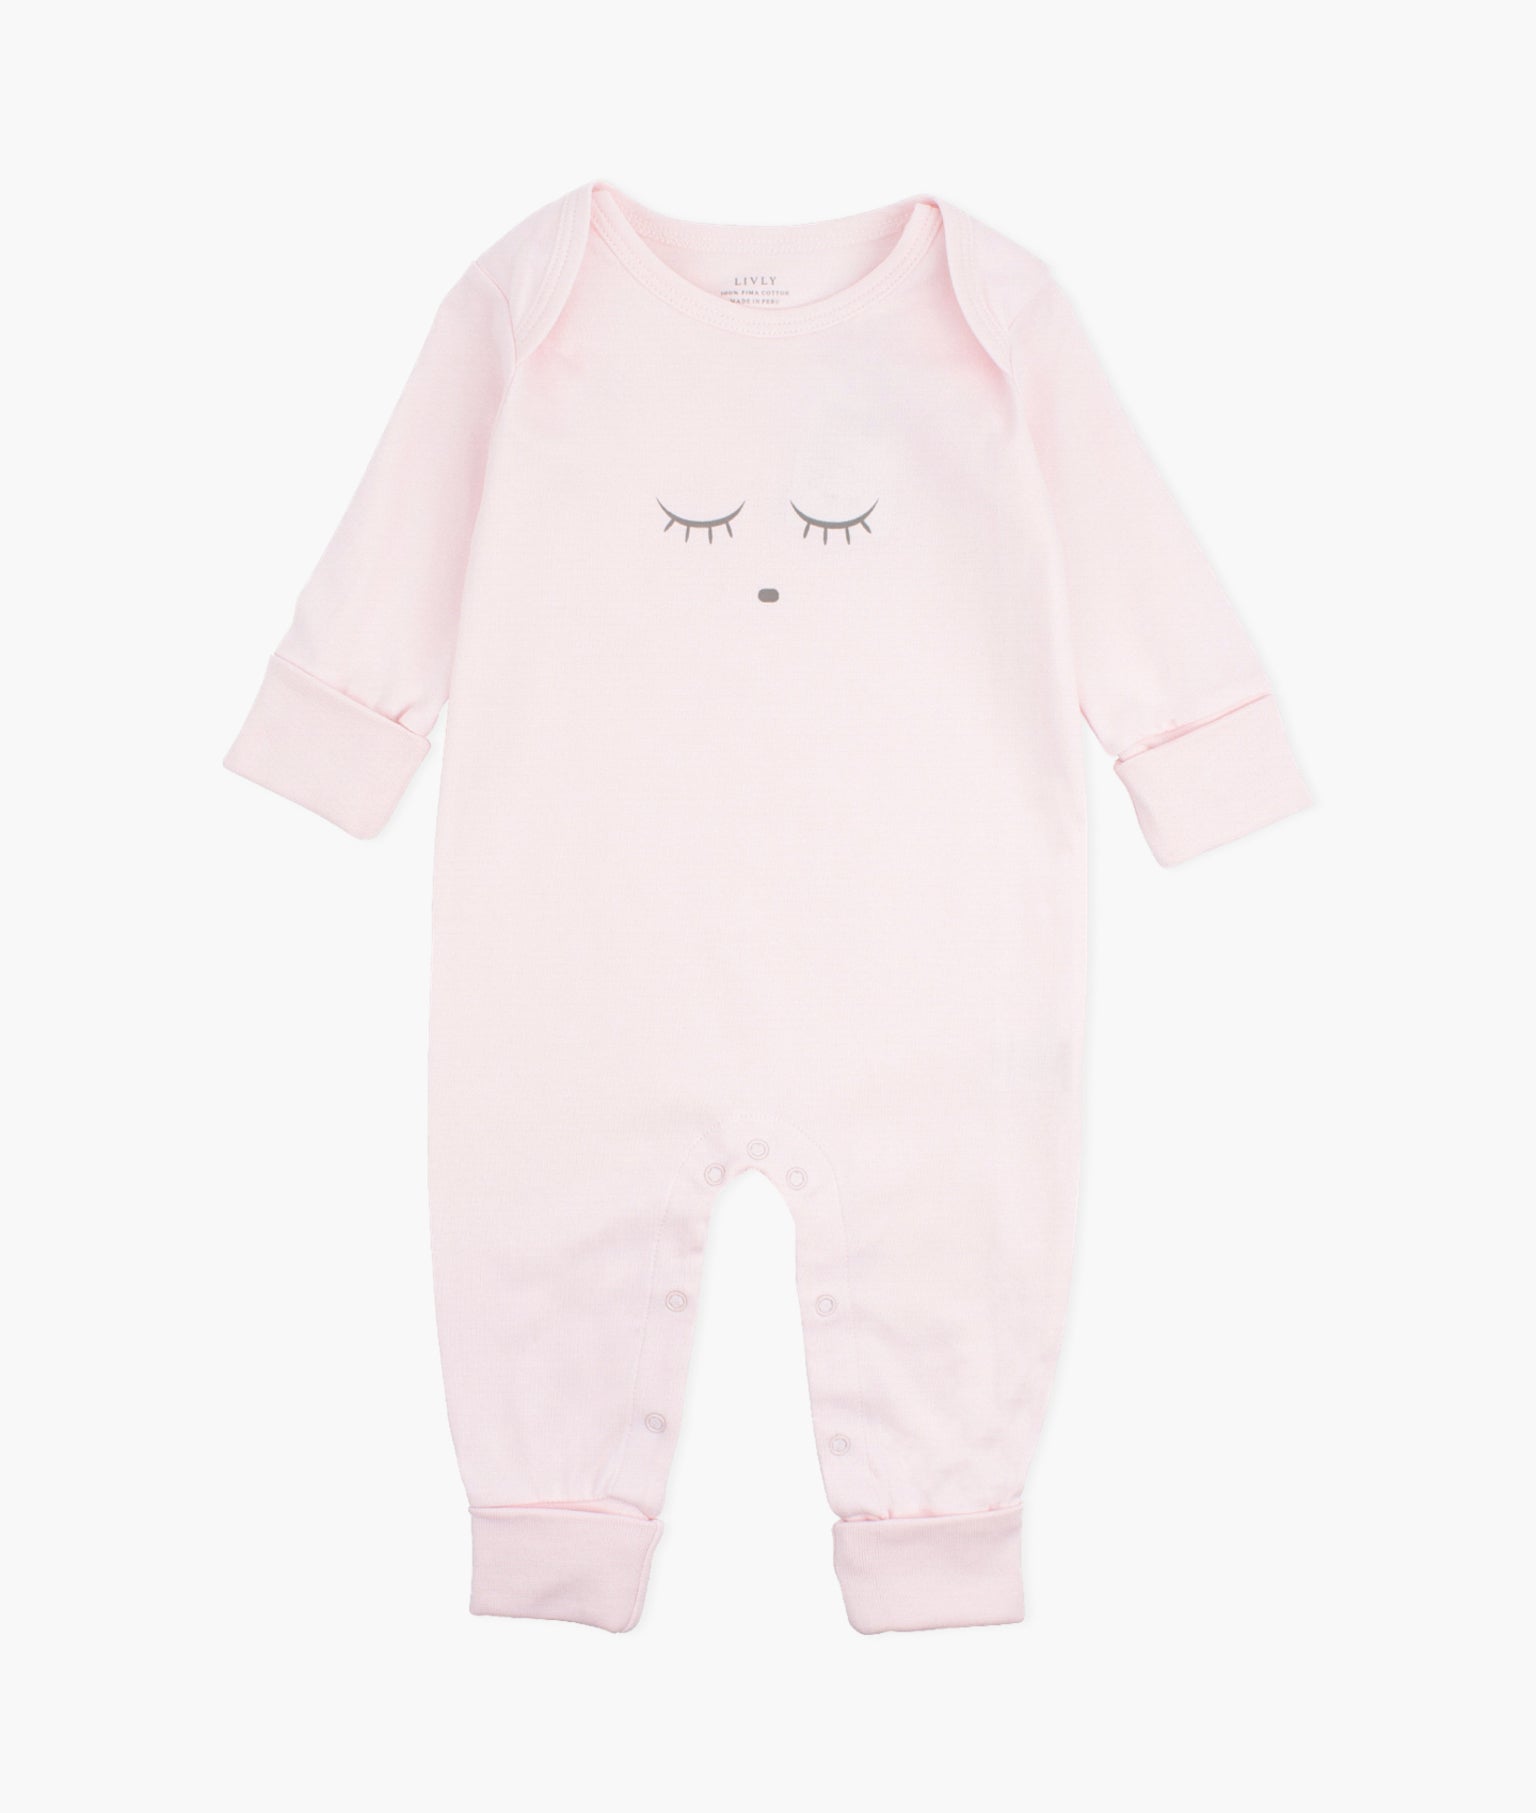 Sleeping Cutie Overall - Pink